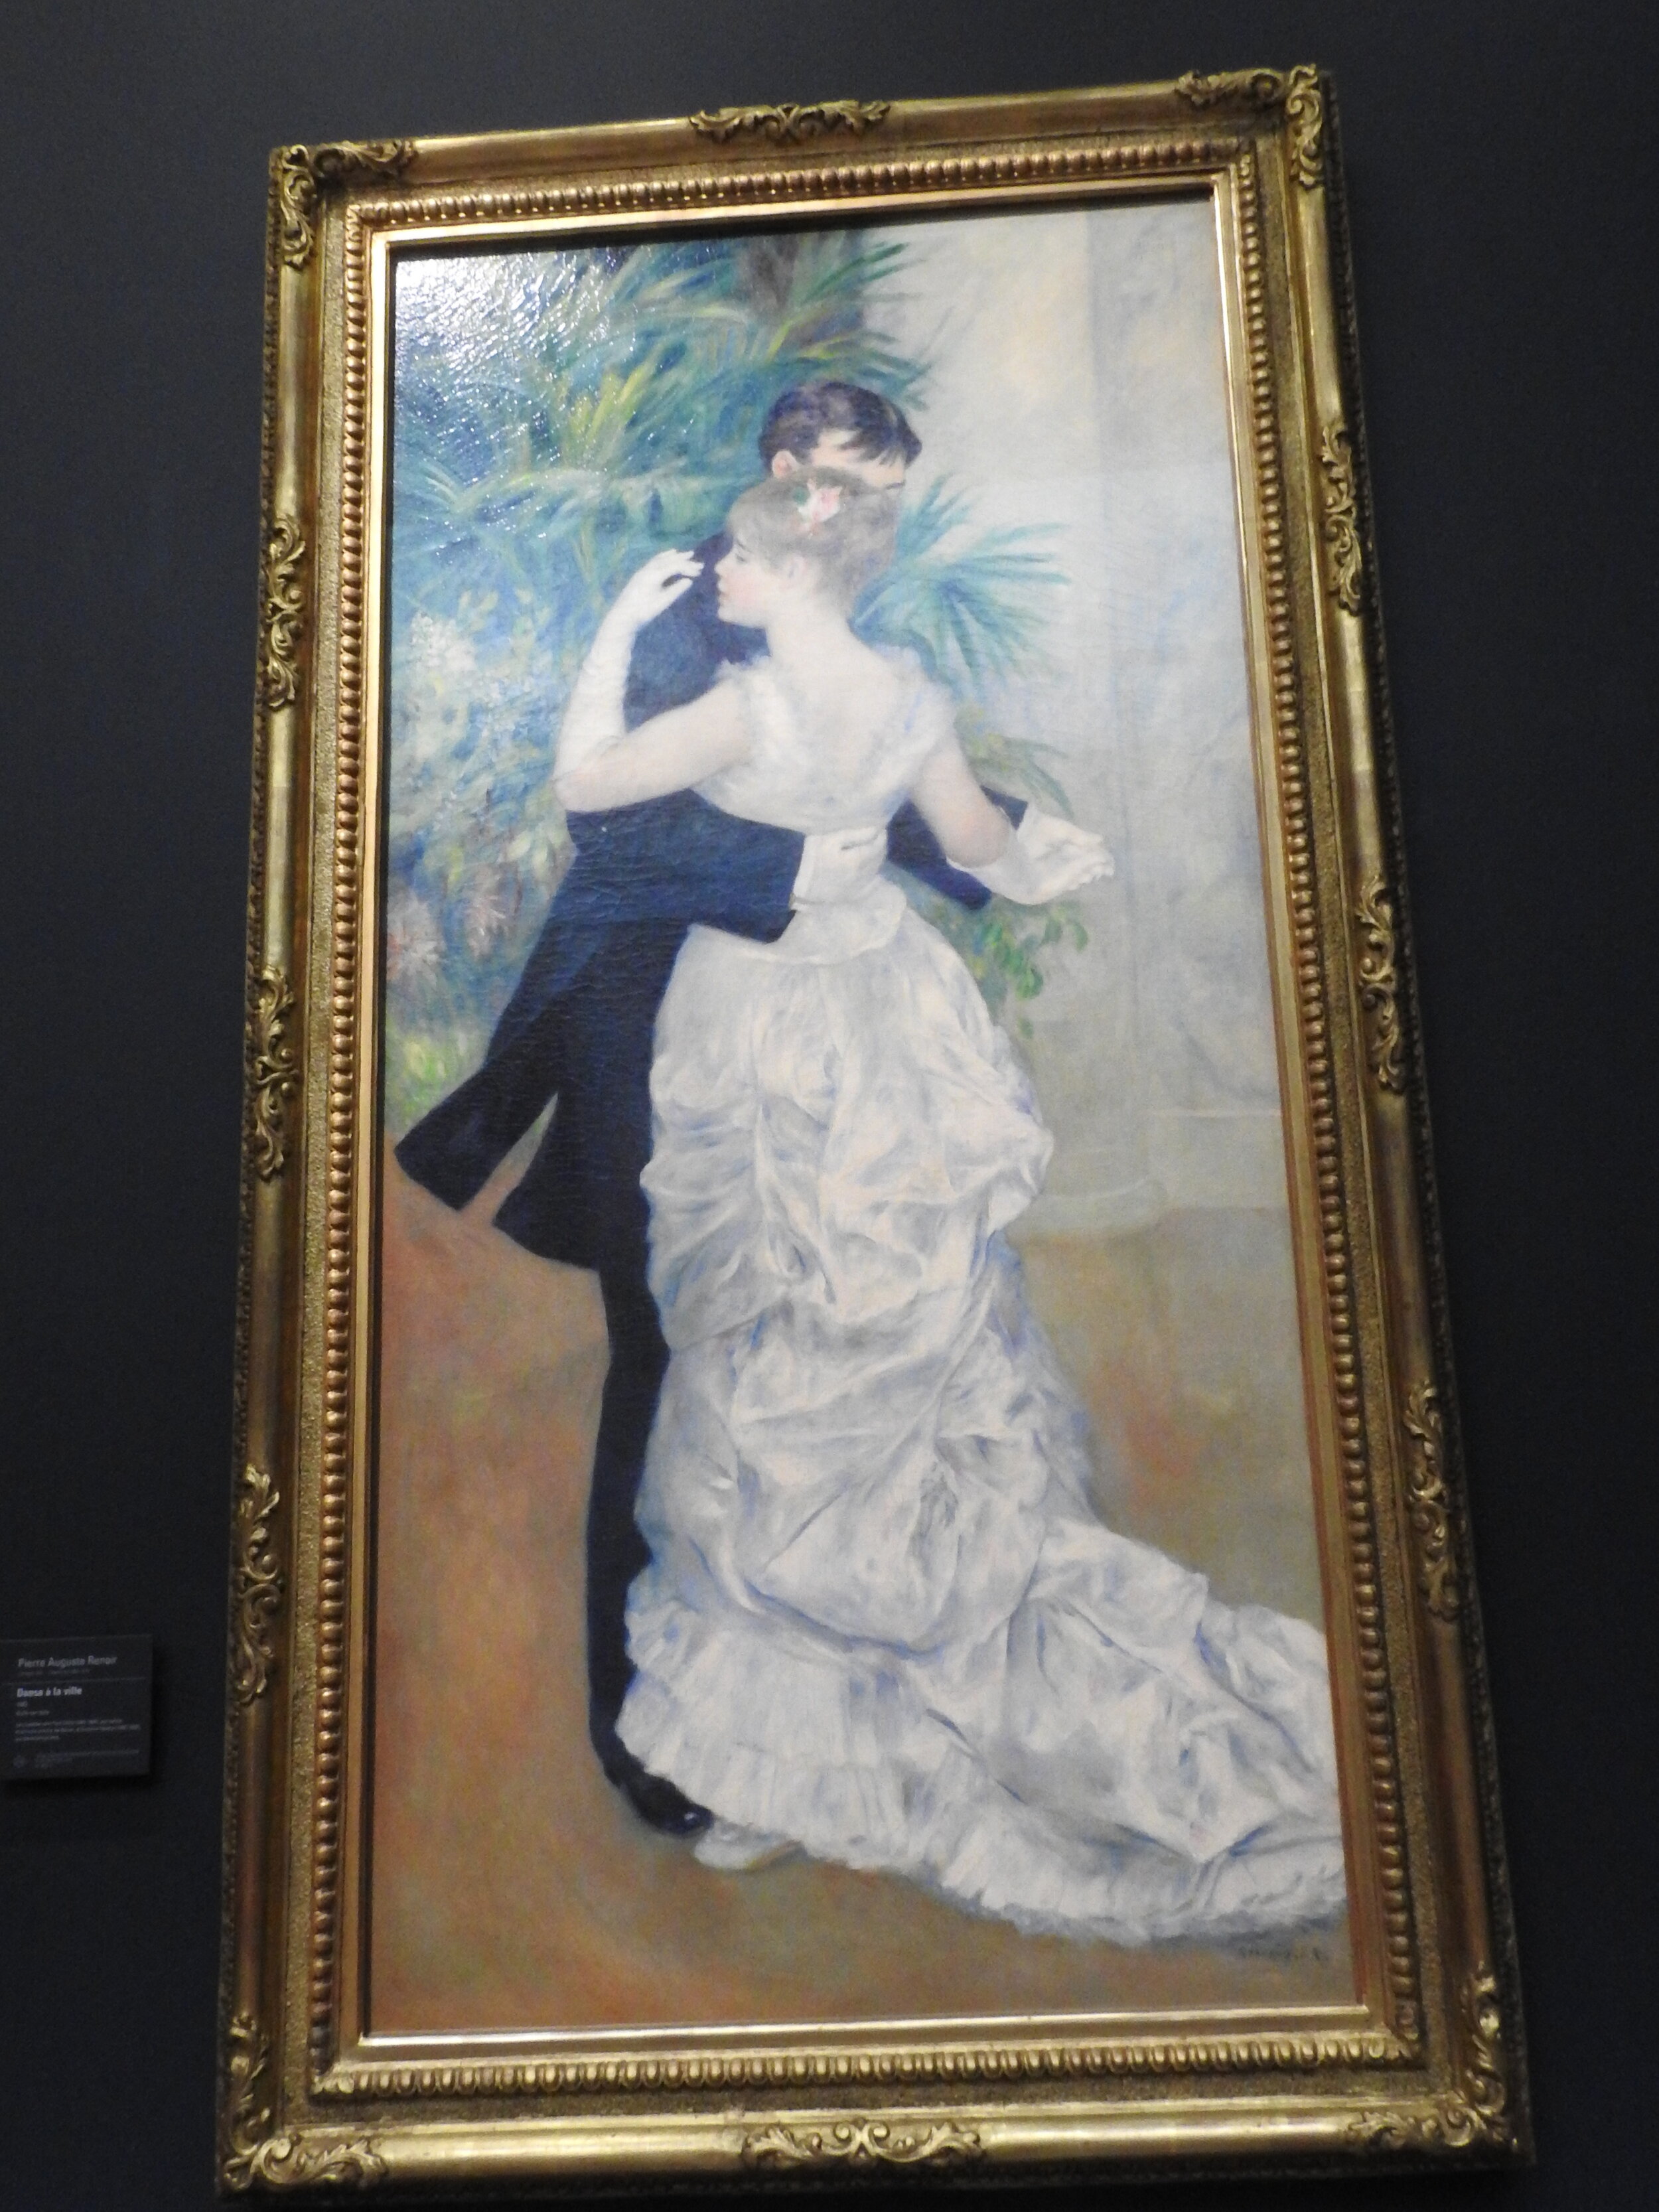 A Renoir -who else?